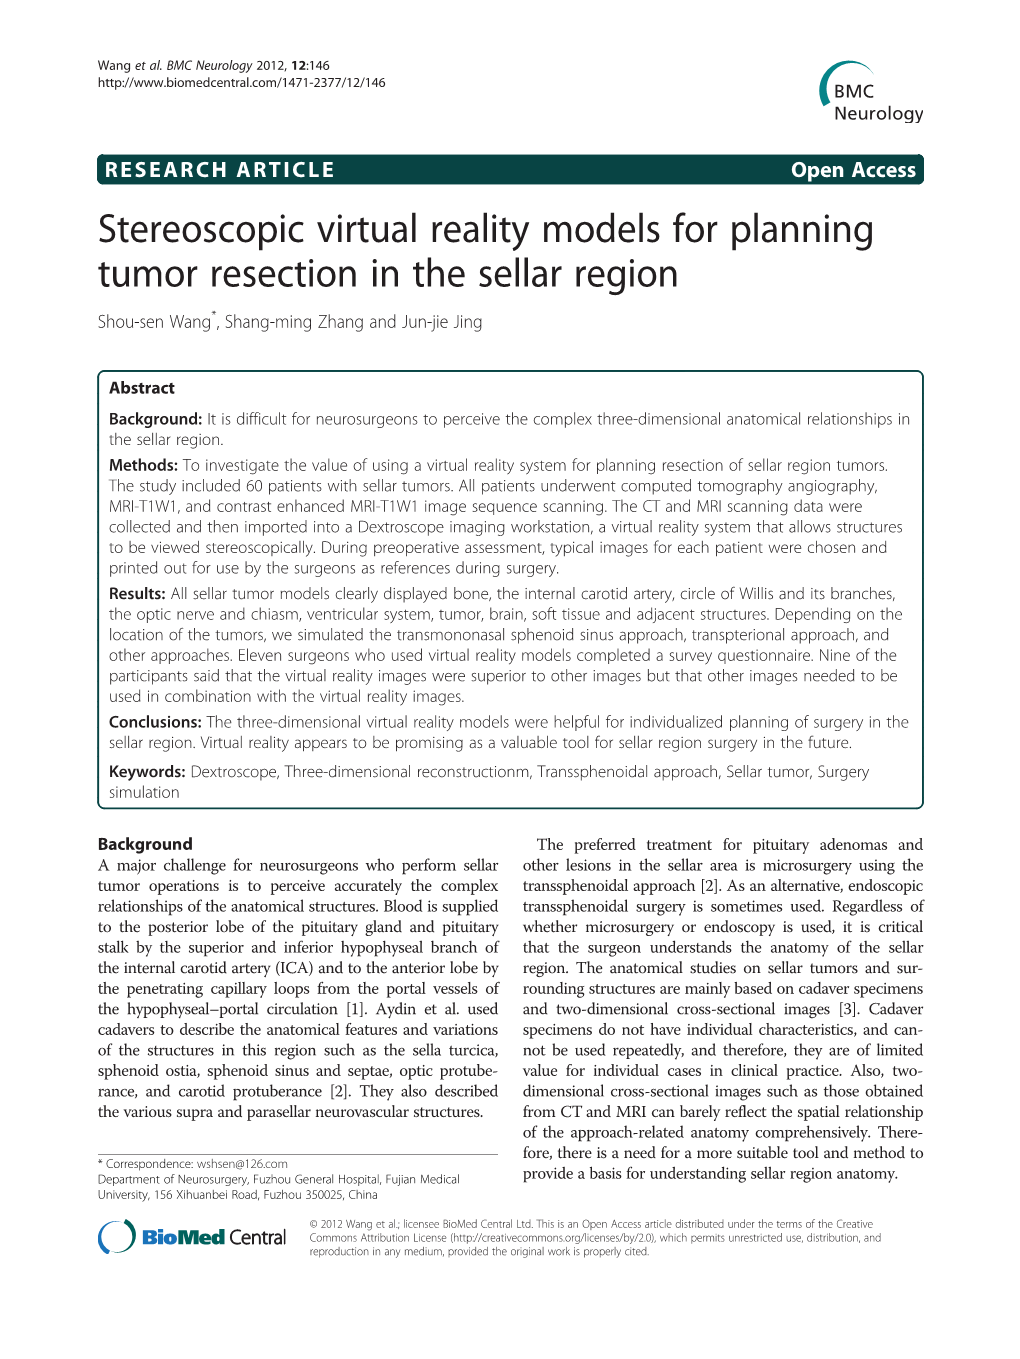 Stereoscopic Virtual Reality Models for Planning Tumor Resection in the Sellar Region Shou-Sen Wang*, Shang-Ming Zhang and Jun-Jie Jing